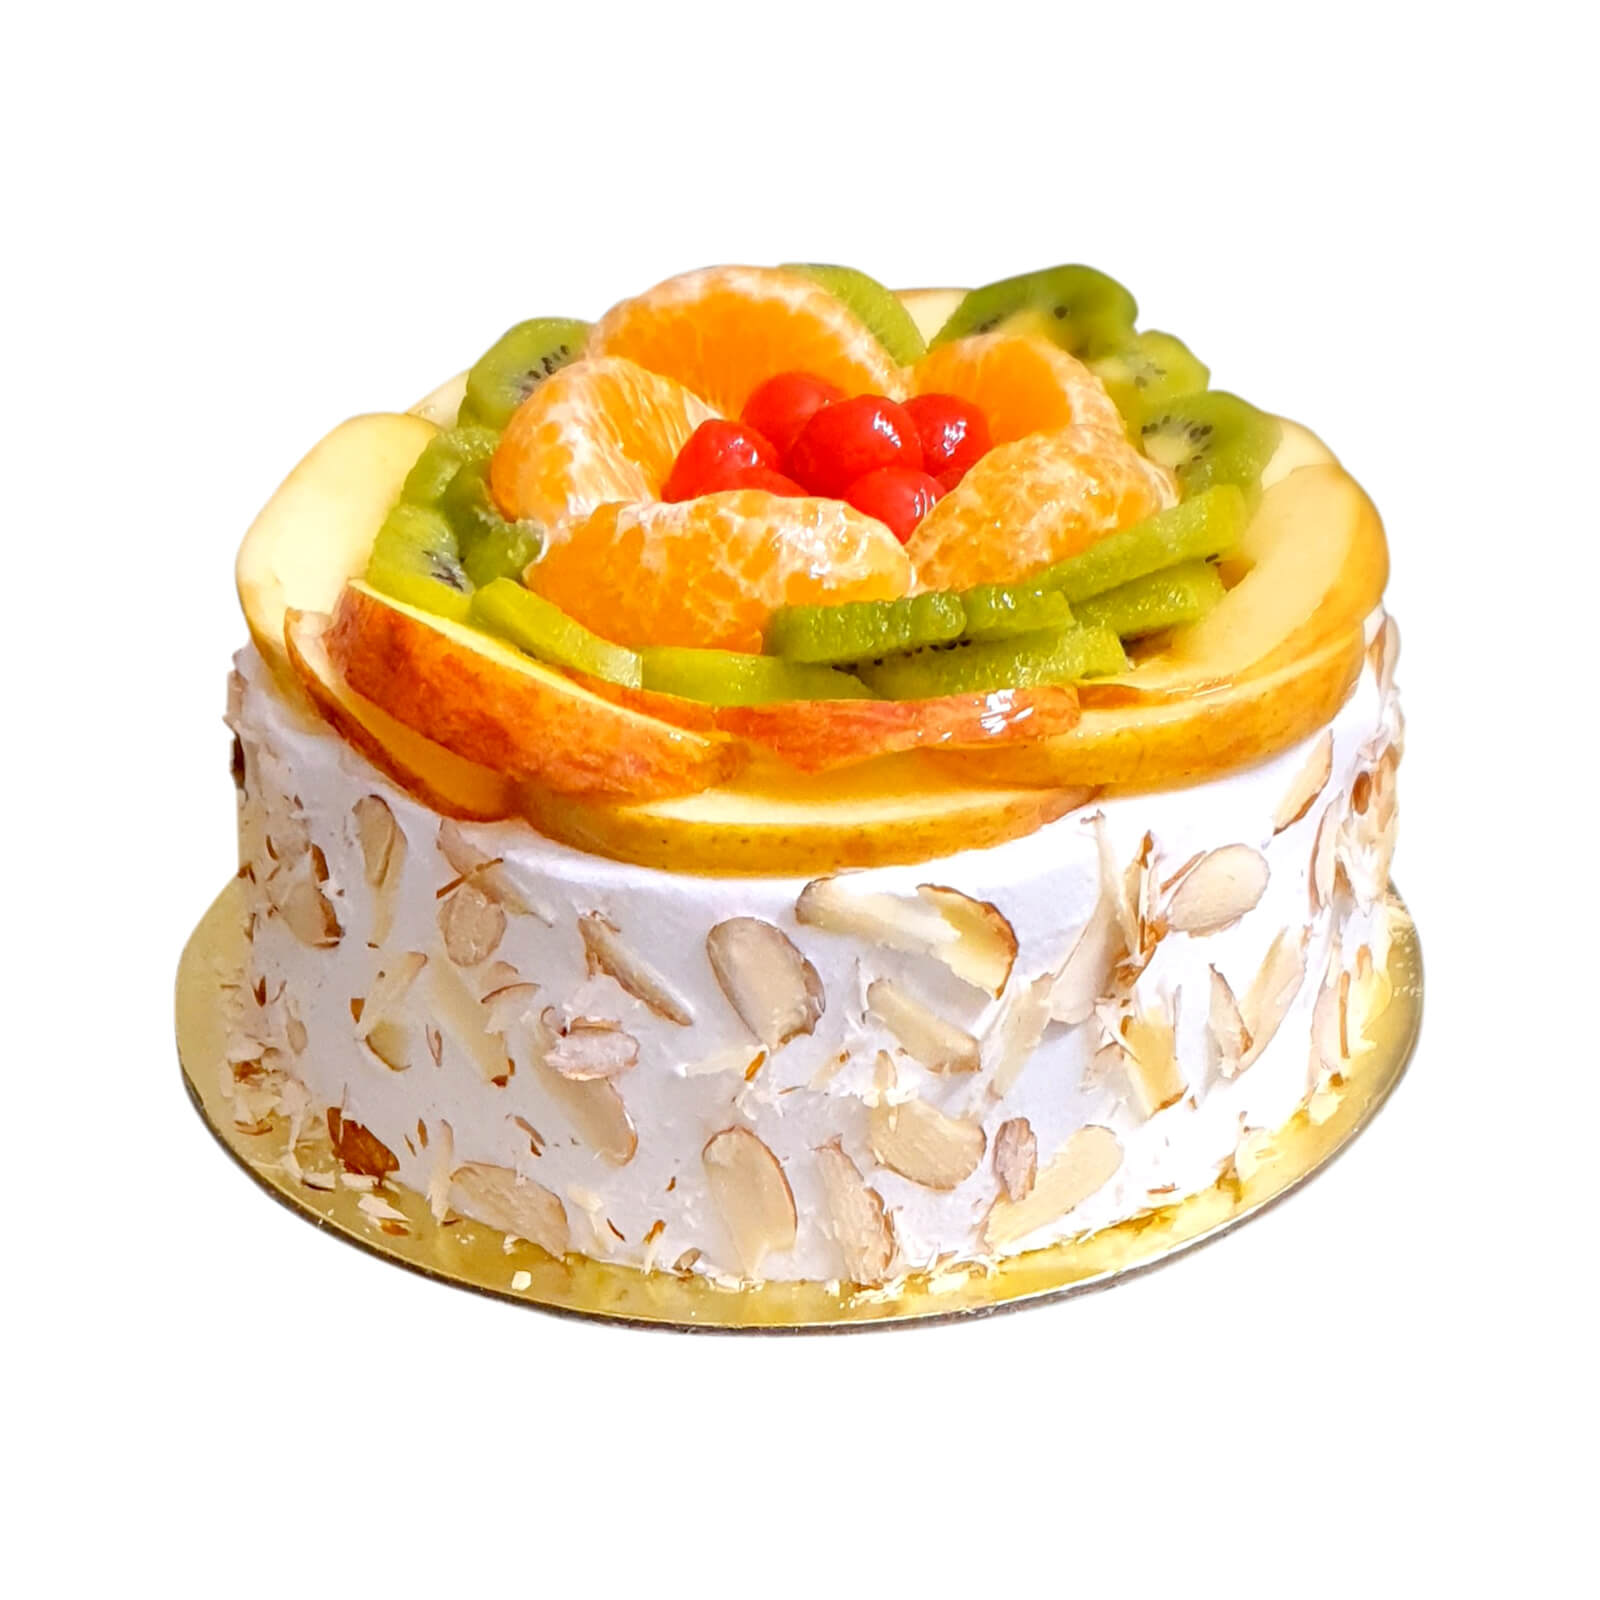 Mix Fruits: Kiwi Orange And Grape On Cream Cake, Happy Birth Day Cake..  Stock Photo, Picture and Royalty Free Image. Image 81362201.